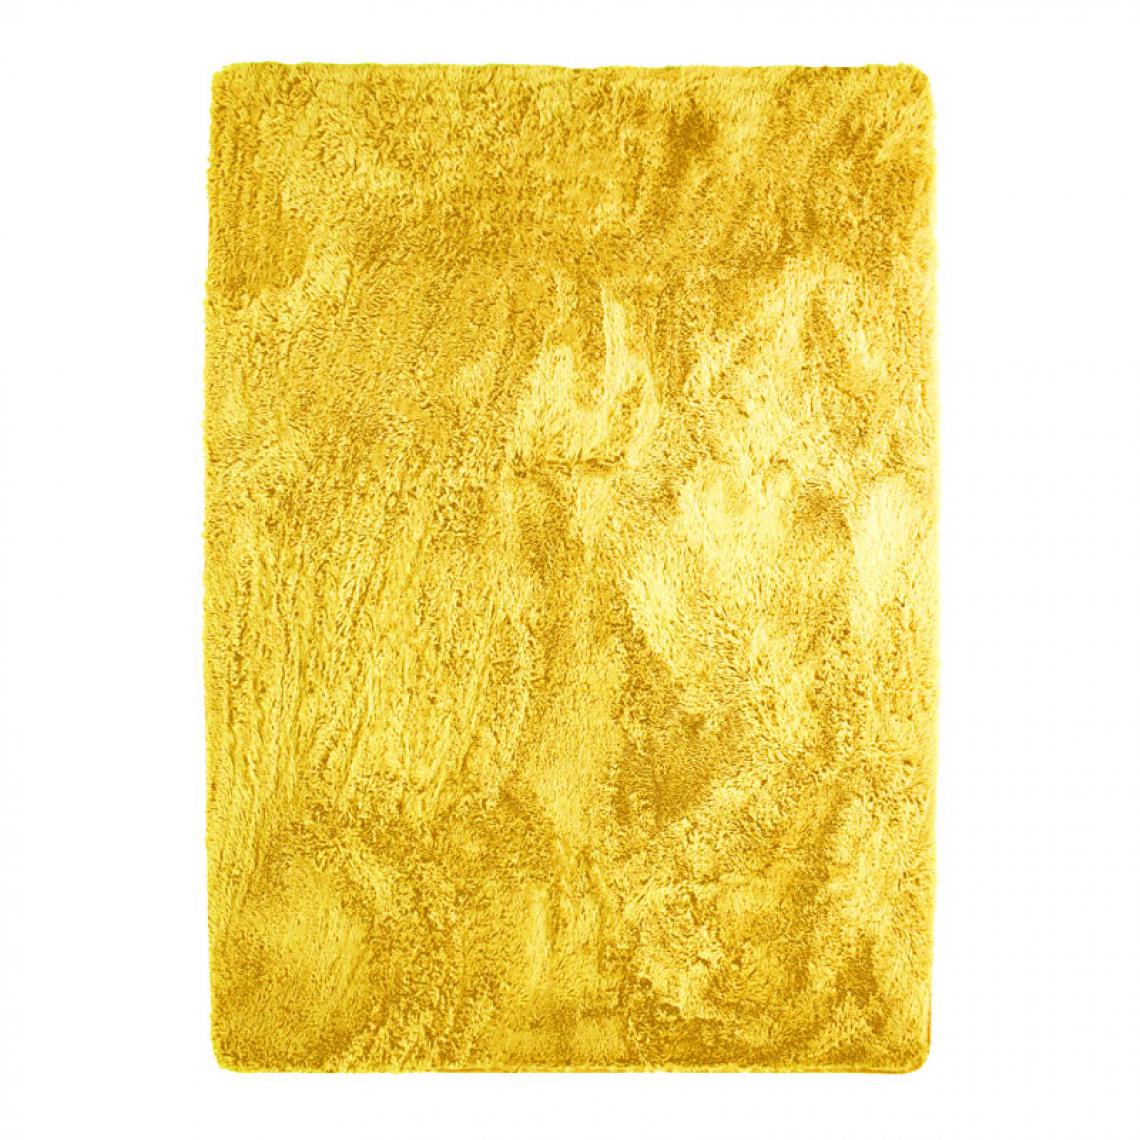 Thedecofactory - NEO YOGA - Tapis à poils longs extra-doux jaune 120x170 - Tapis